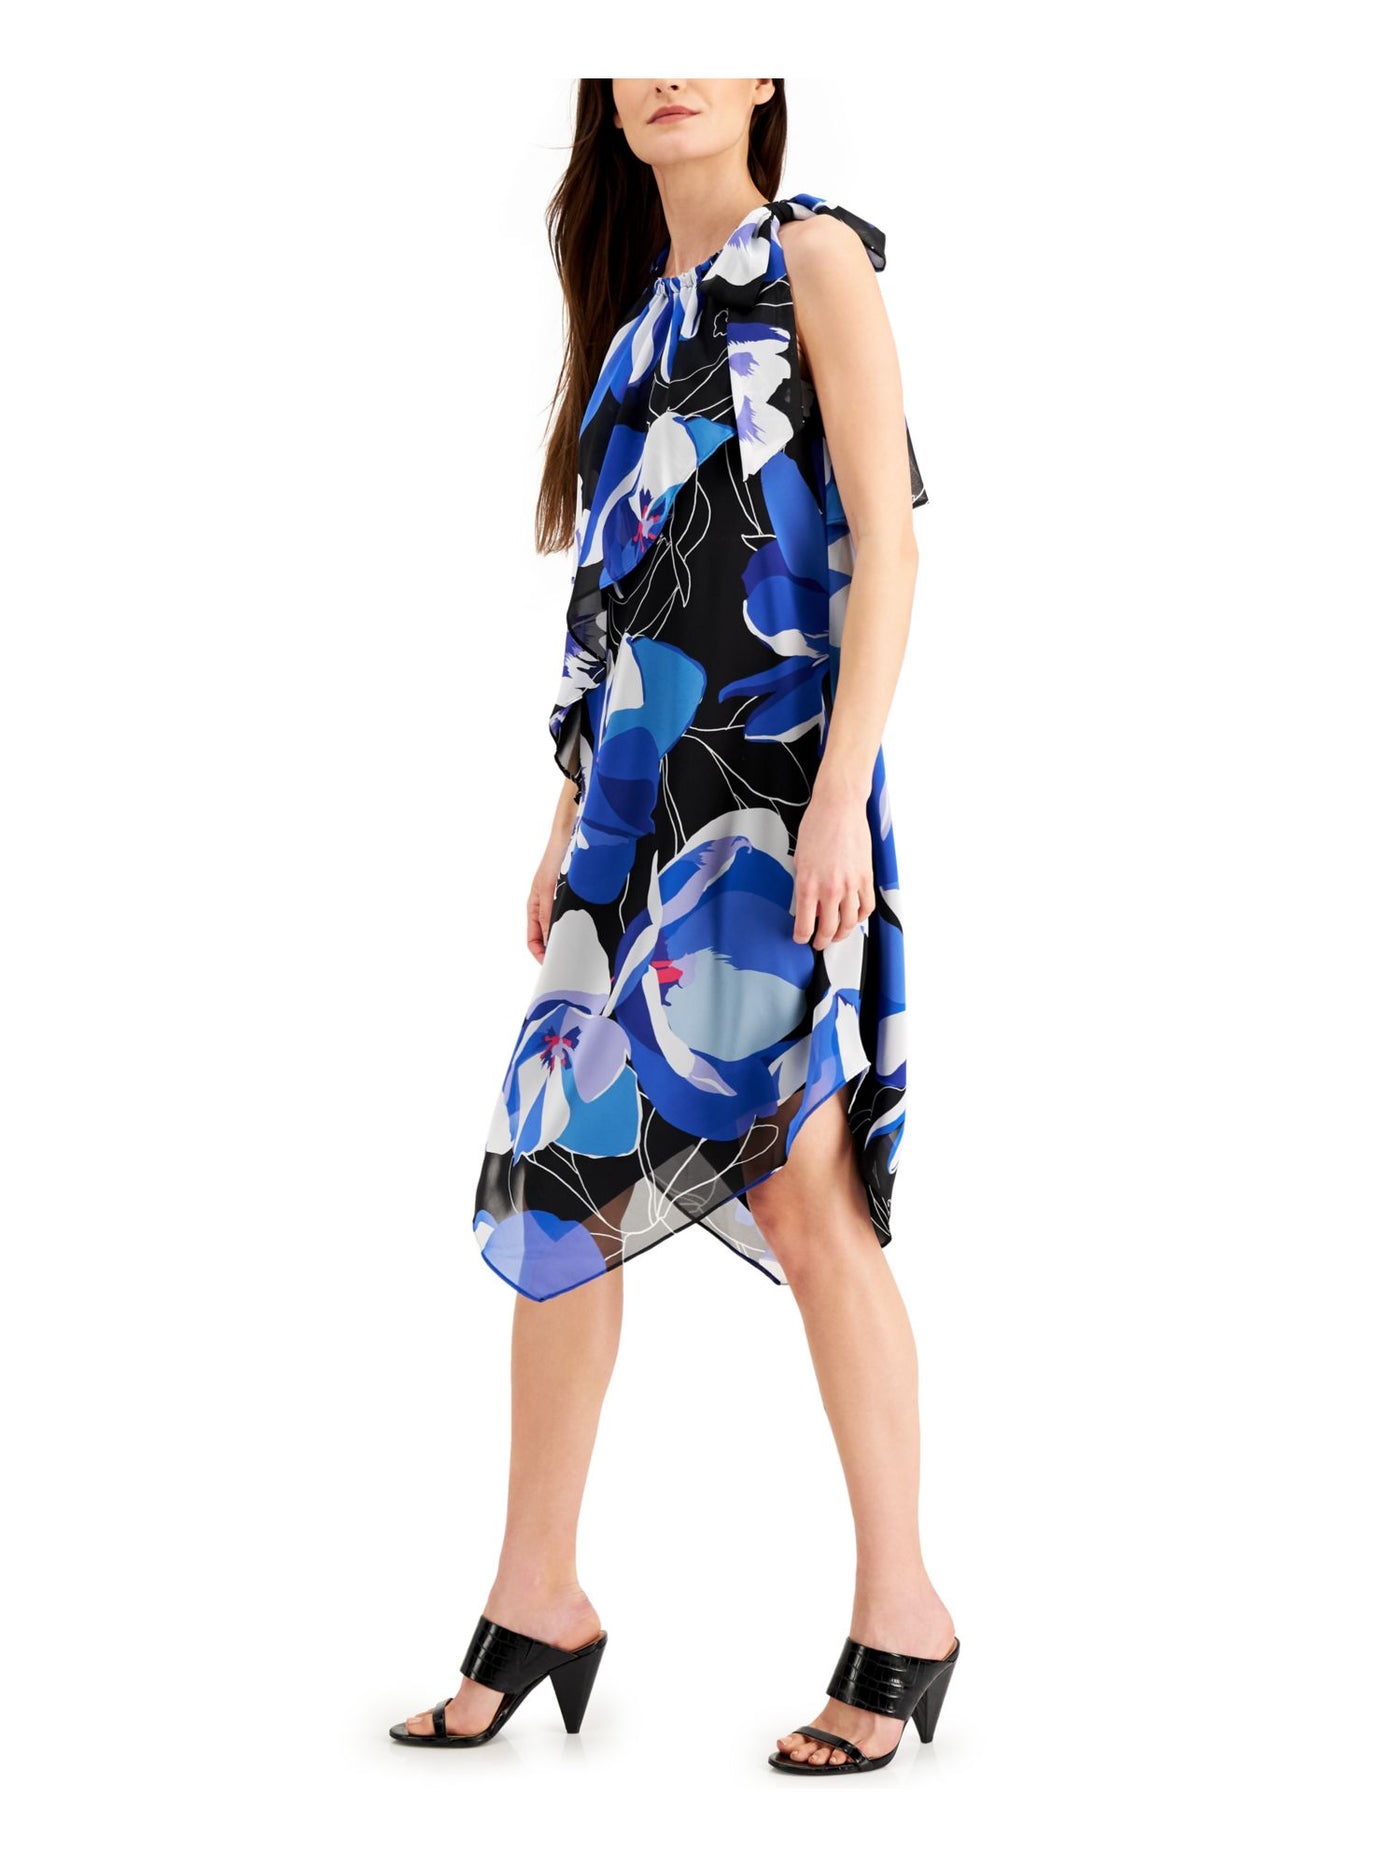 INC DRESS Womens Blue Tie Floral Halter Below The Knee Party Shift Dress 10